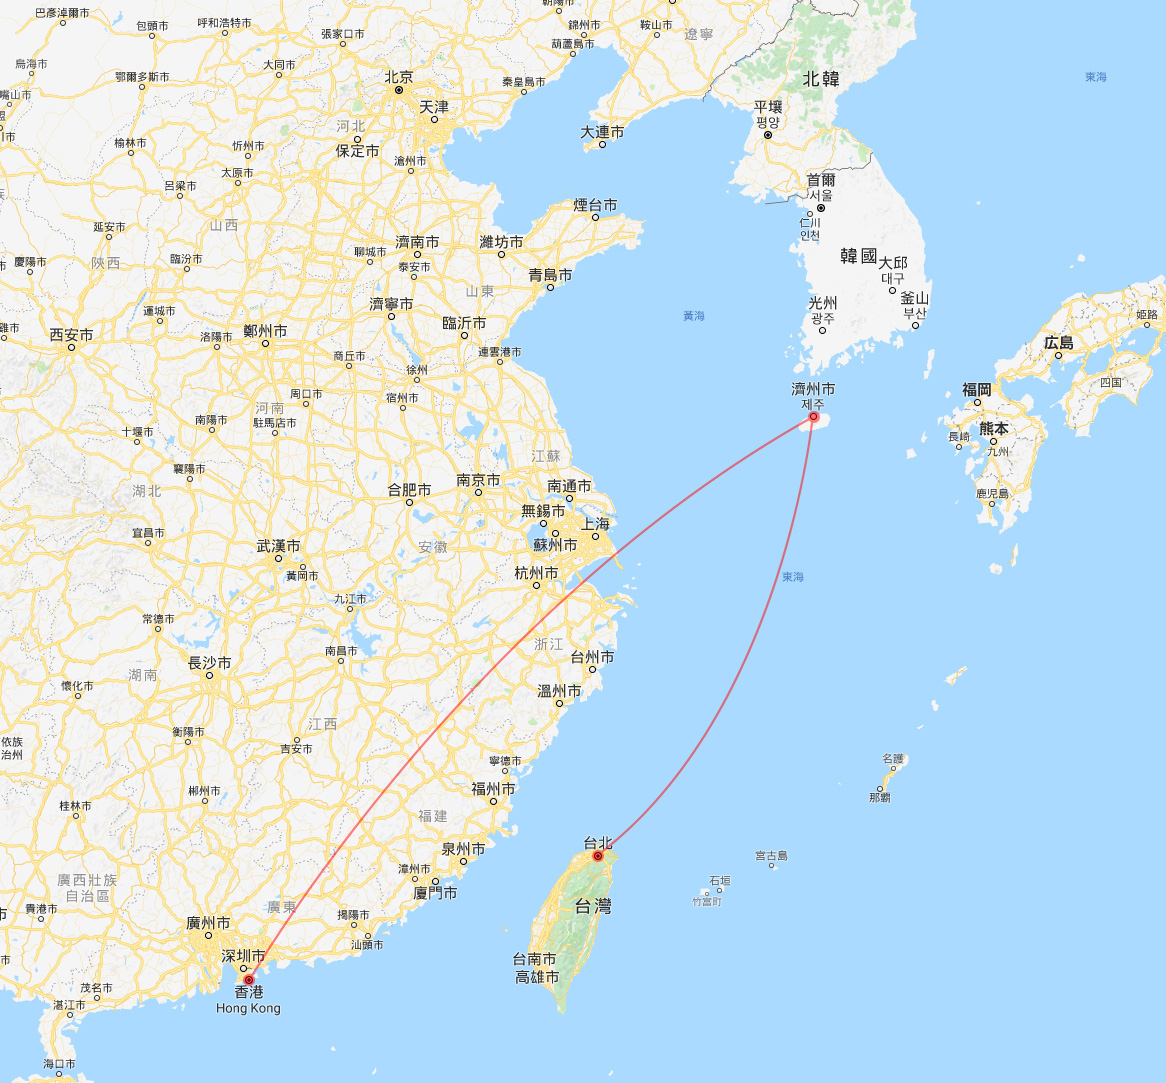 Jeju International Airport Information